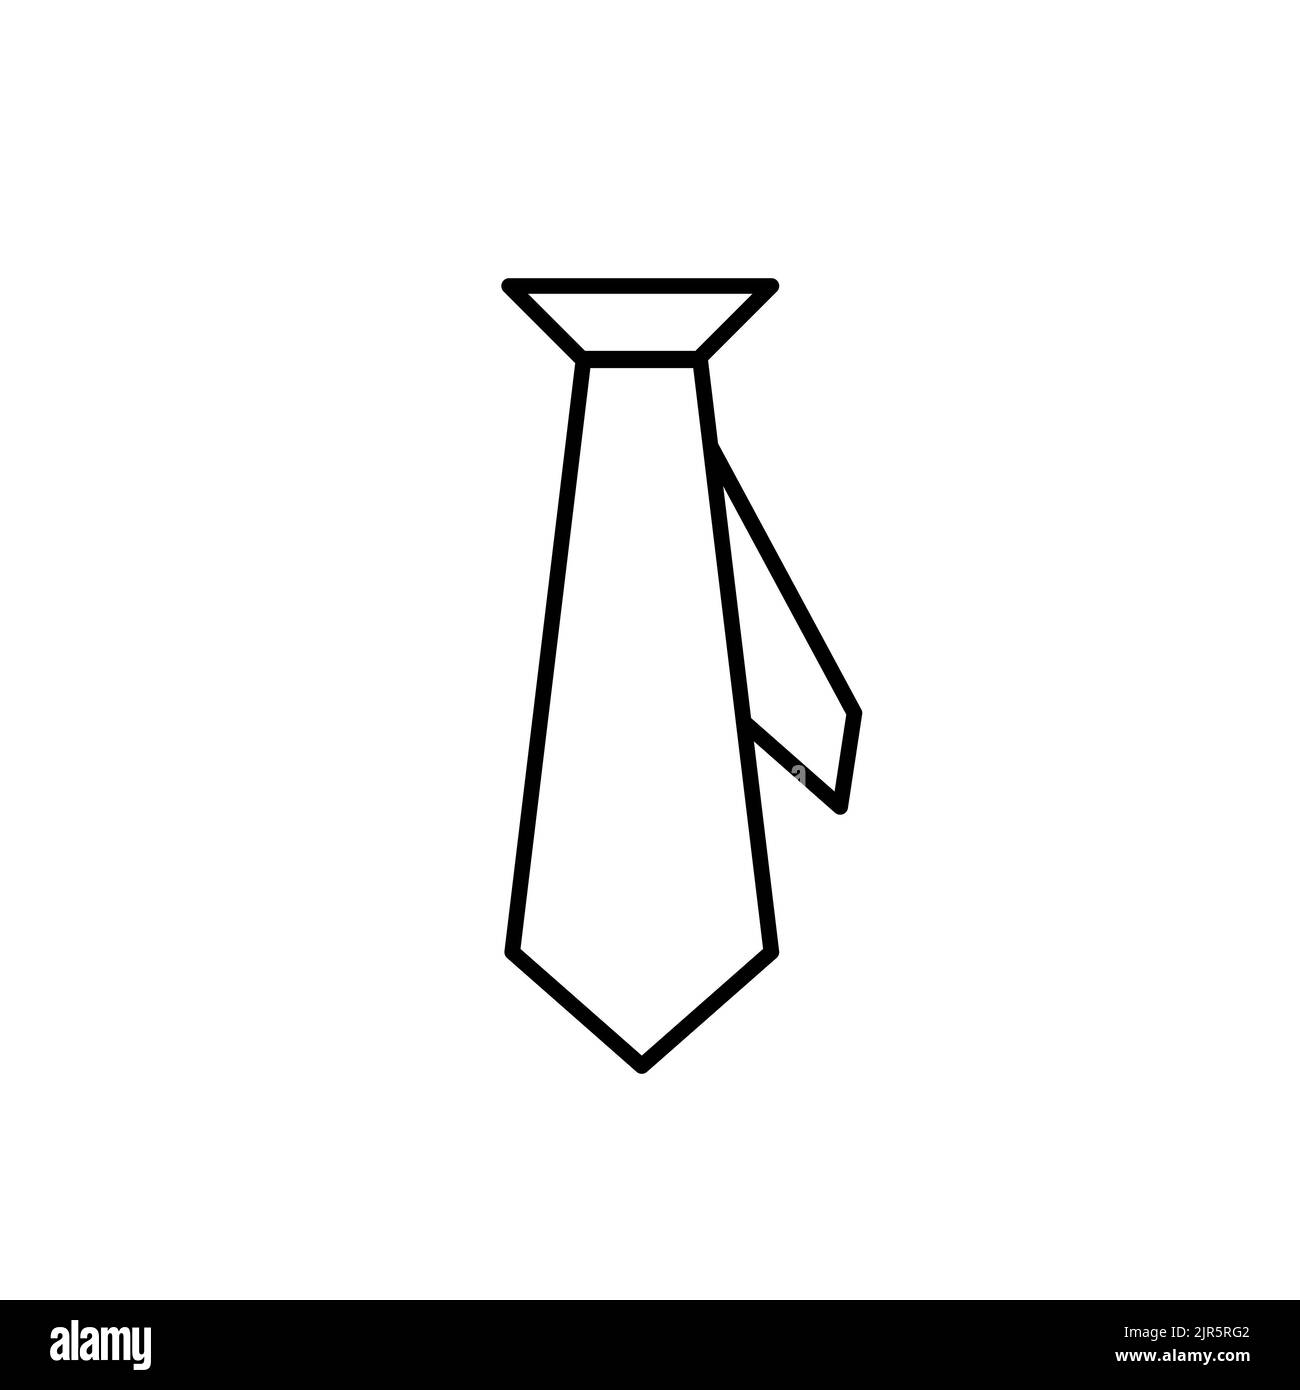 Necktie Clipart Black And White